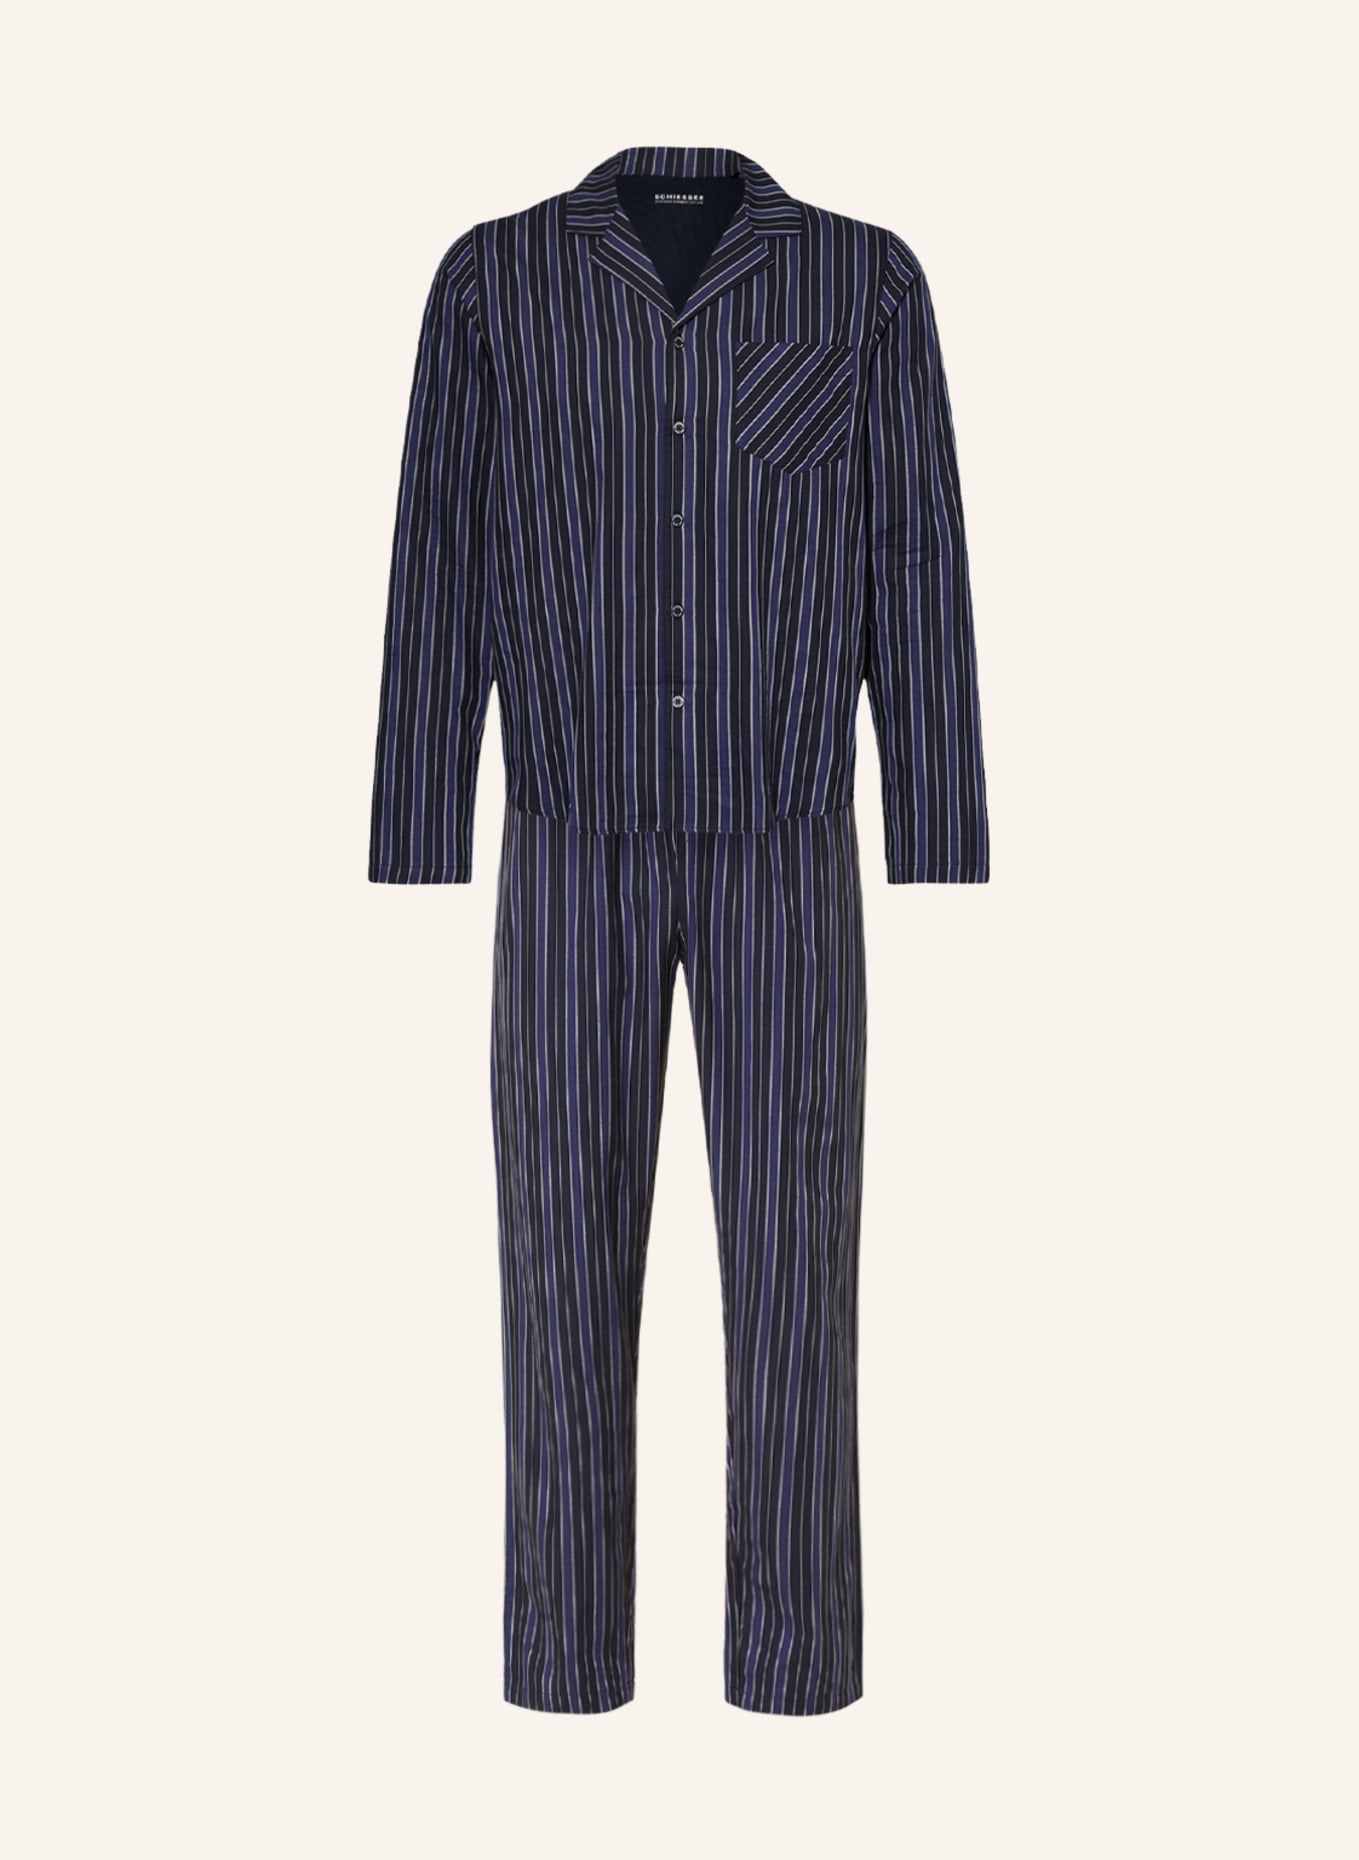 SCHIESSER Pajamas SELECTED PREMIUM! in dark blue/ blue/ blue gray